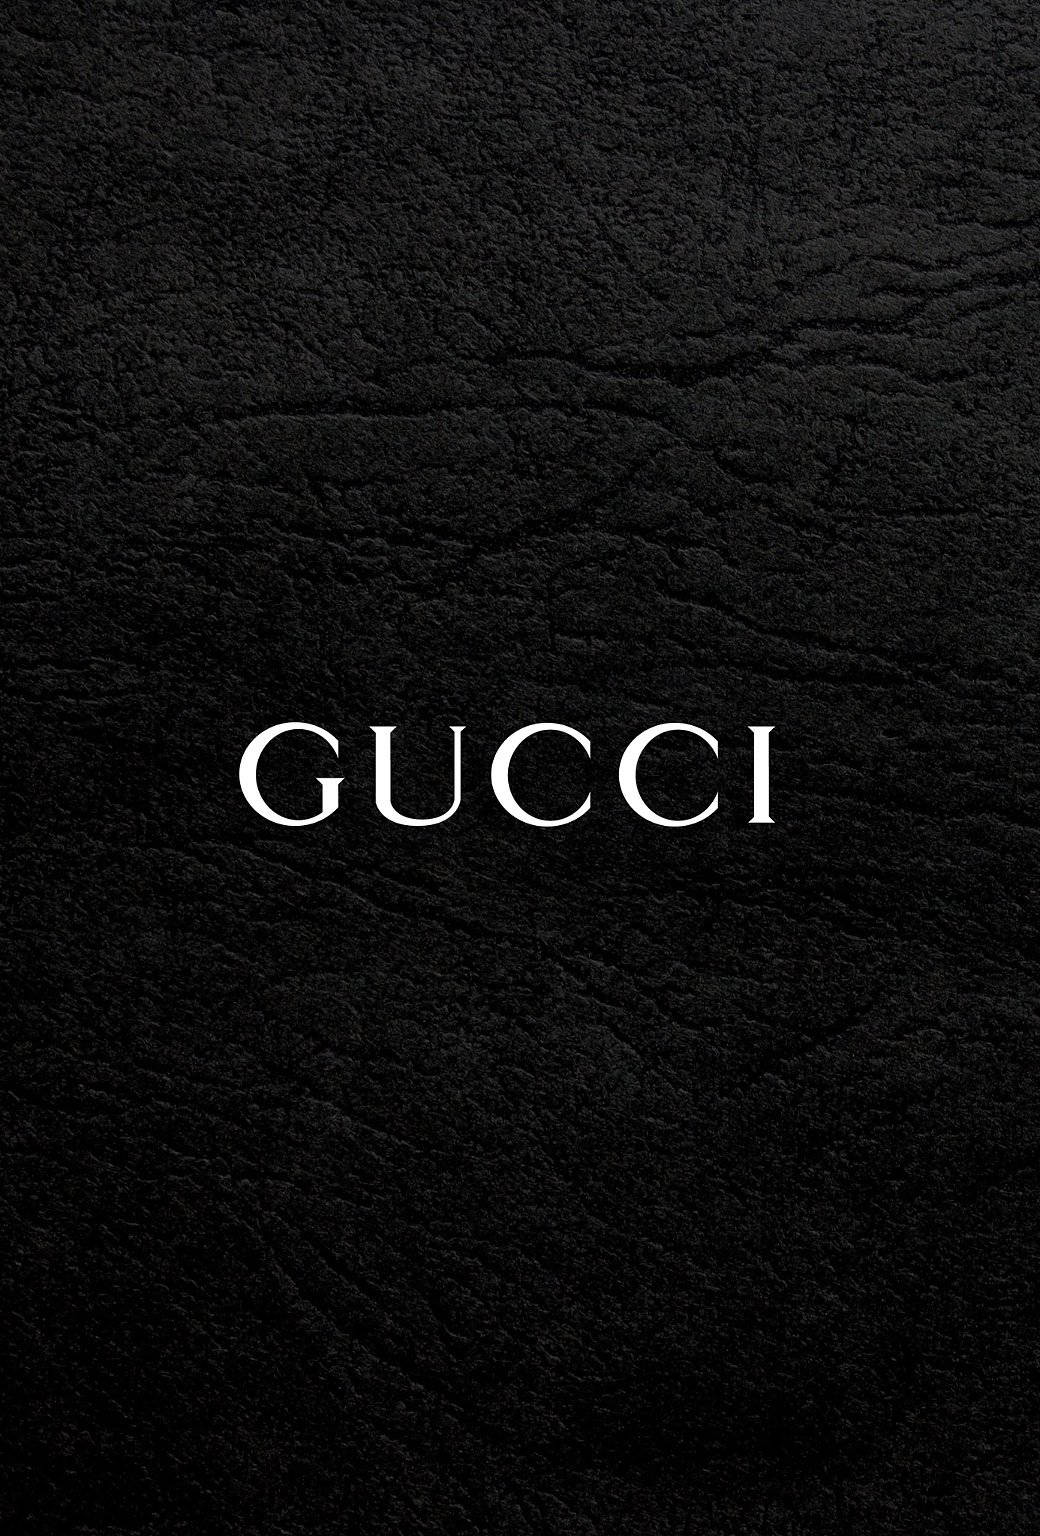 Black Gucci Leather Wallpaper